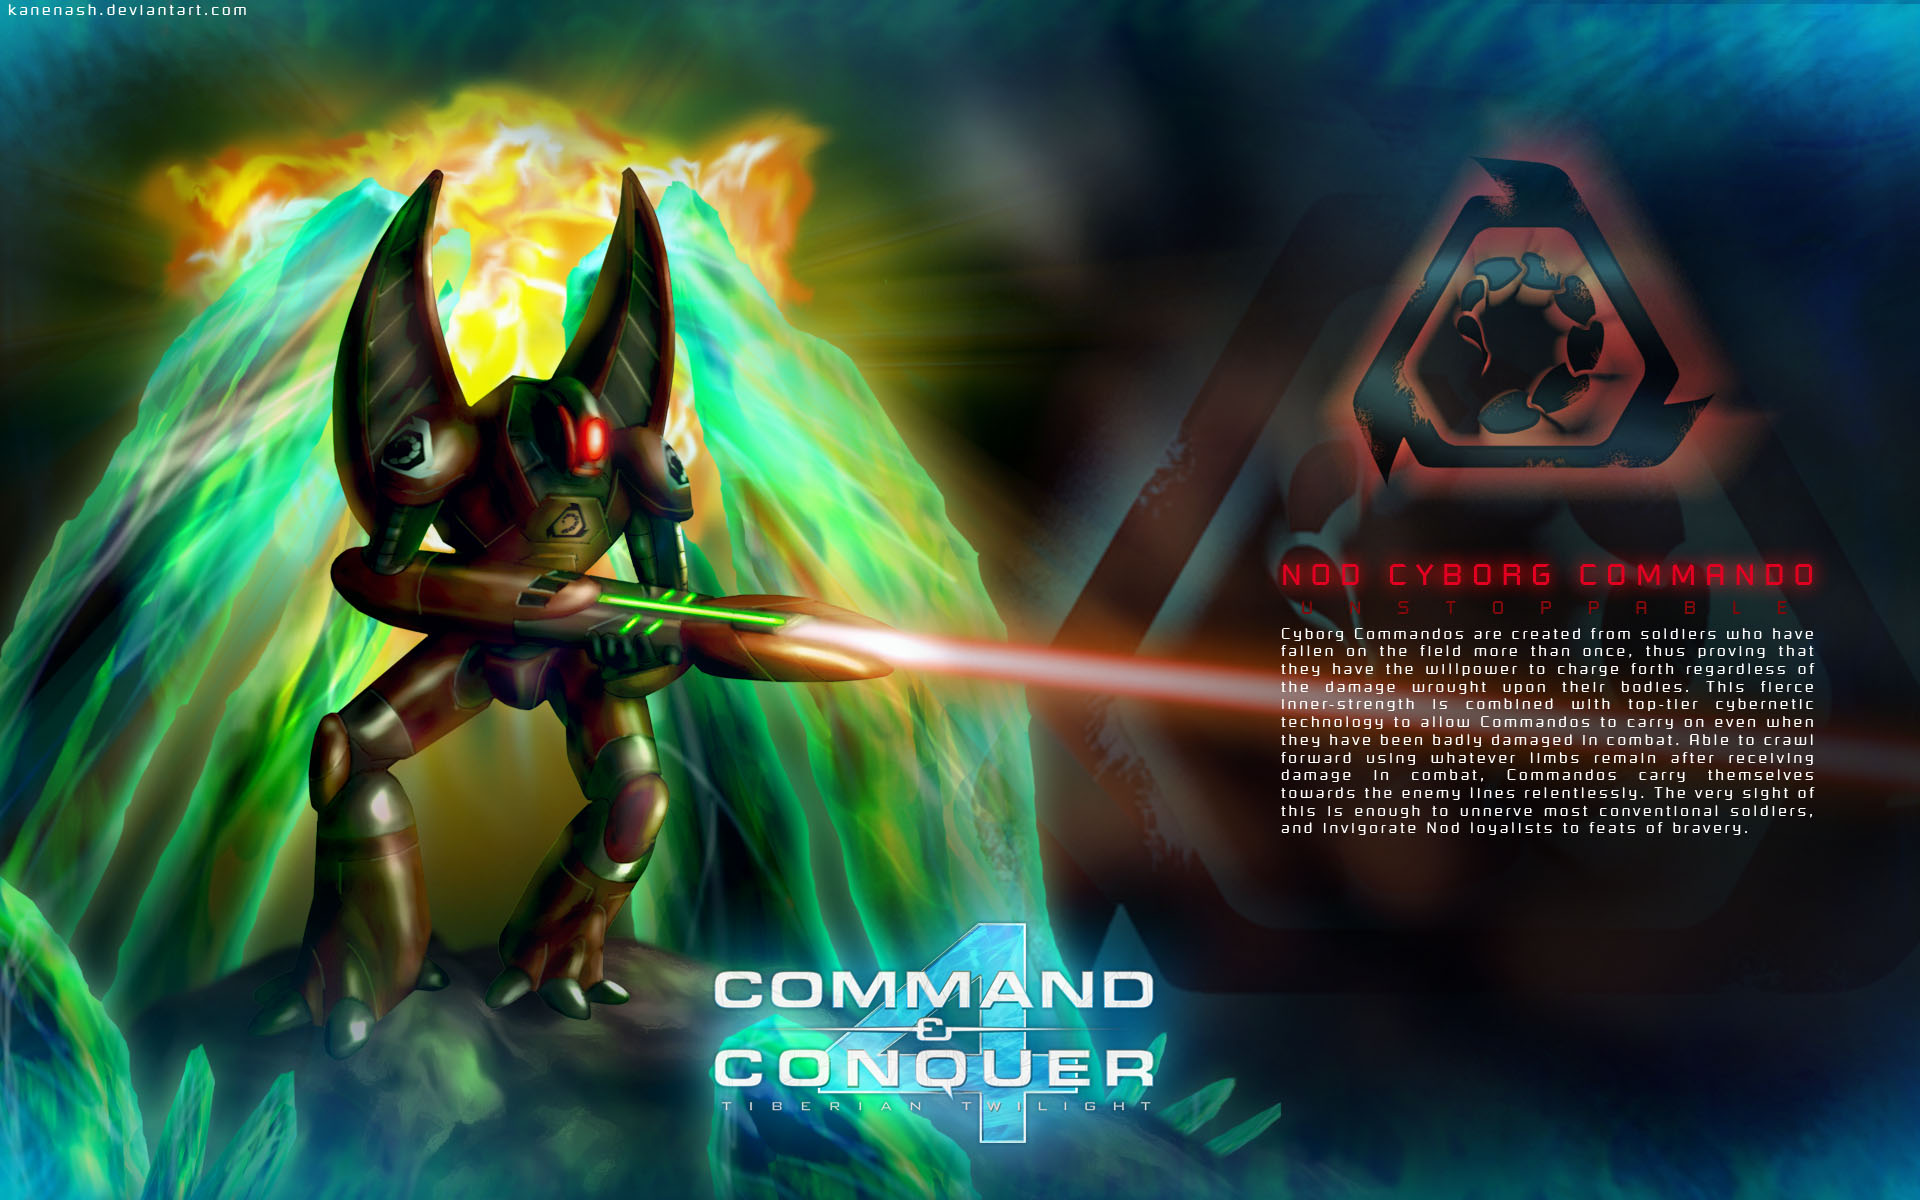 Nod_Cyborg_Commando_by_KaneNash.jpg